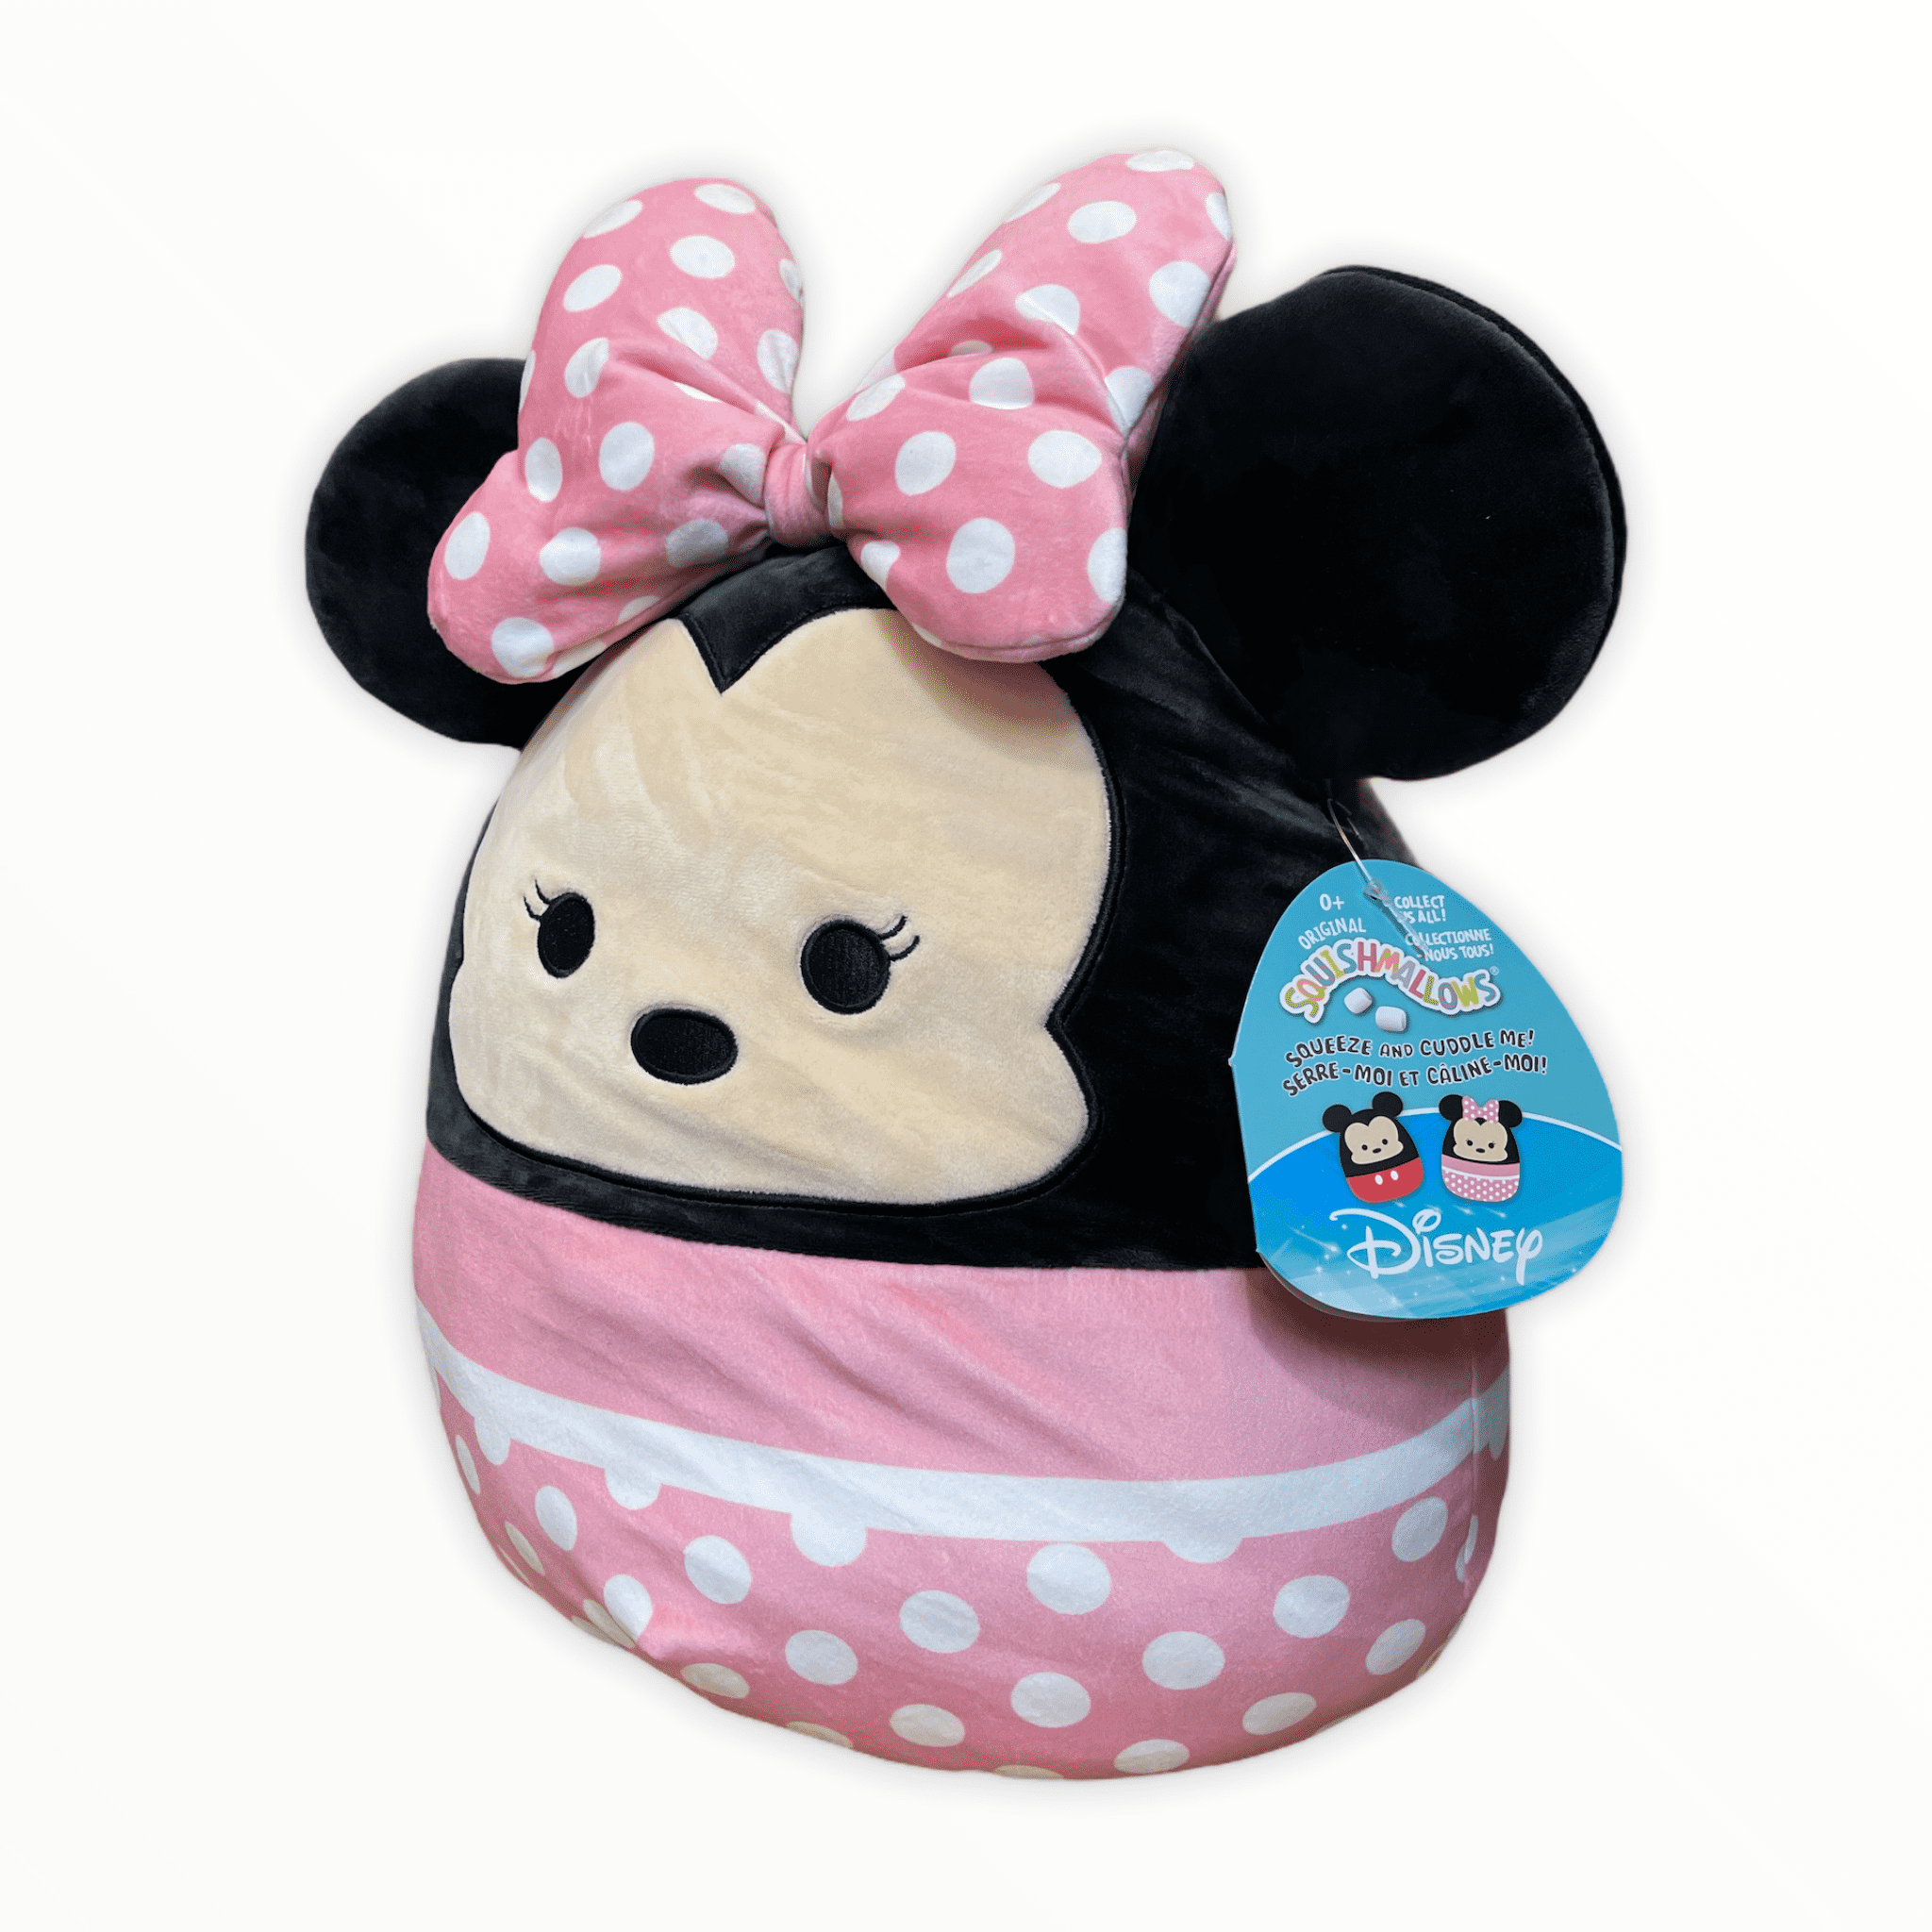 Squishmallow Minnie Mouse Plush 7" Disney Pink Polka Dot 2021 Kellytoyt for sale online 